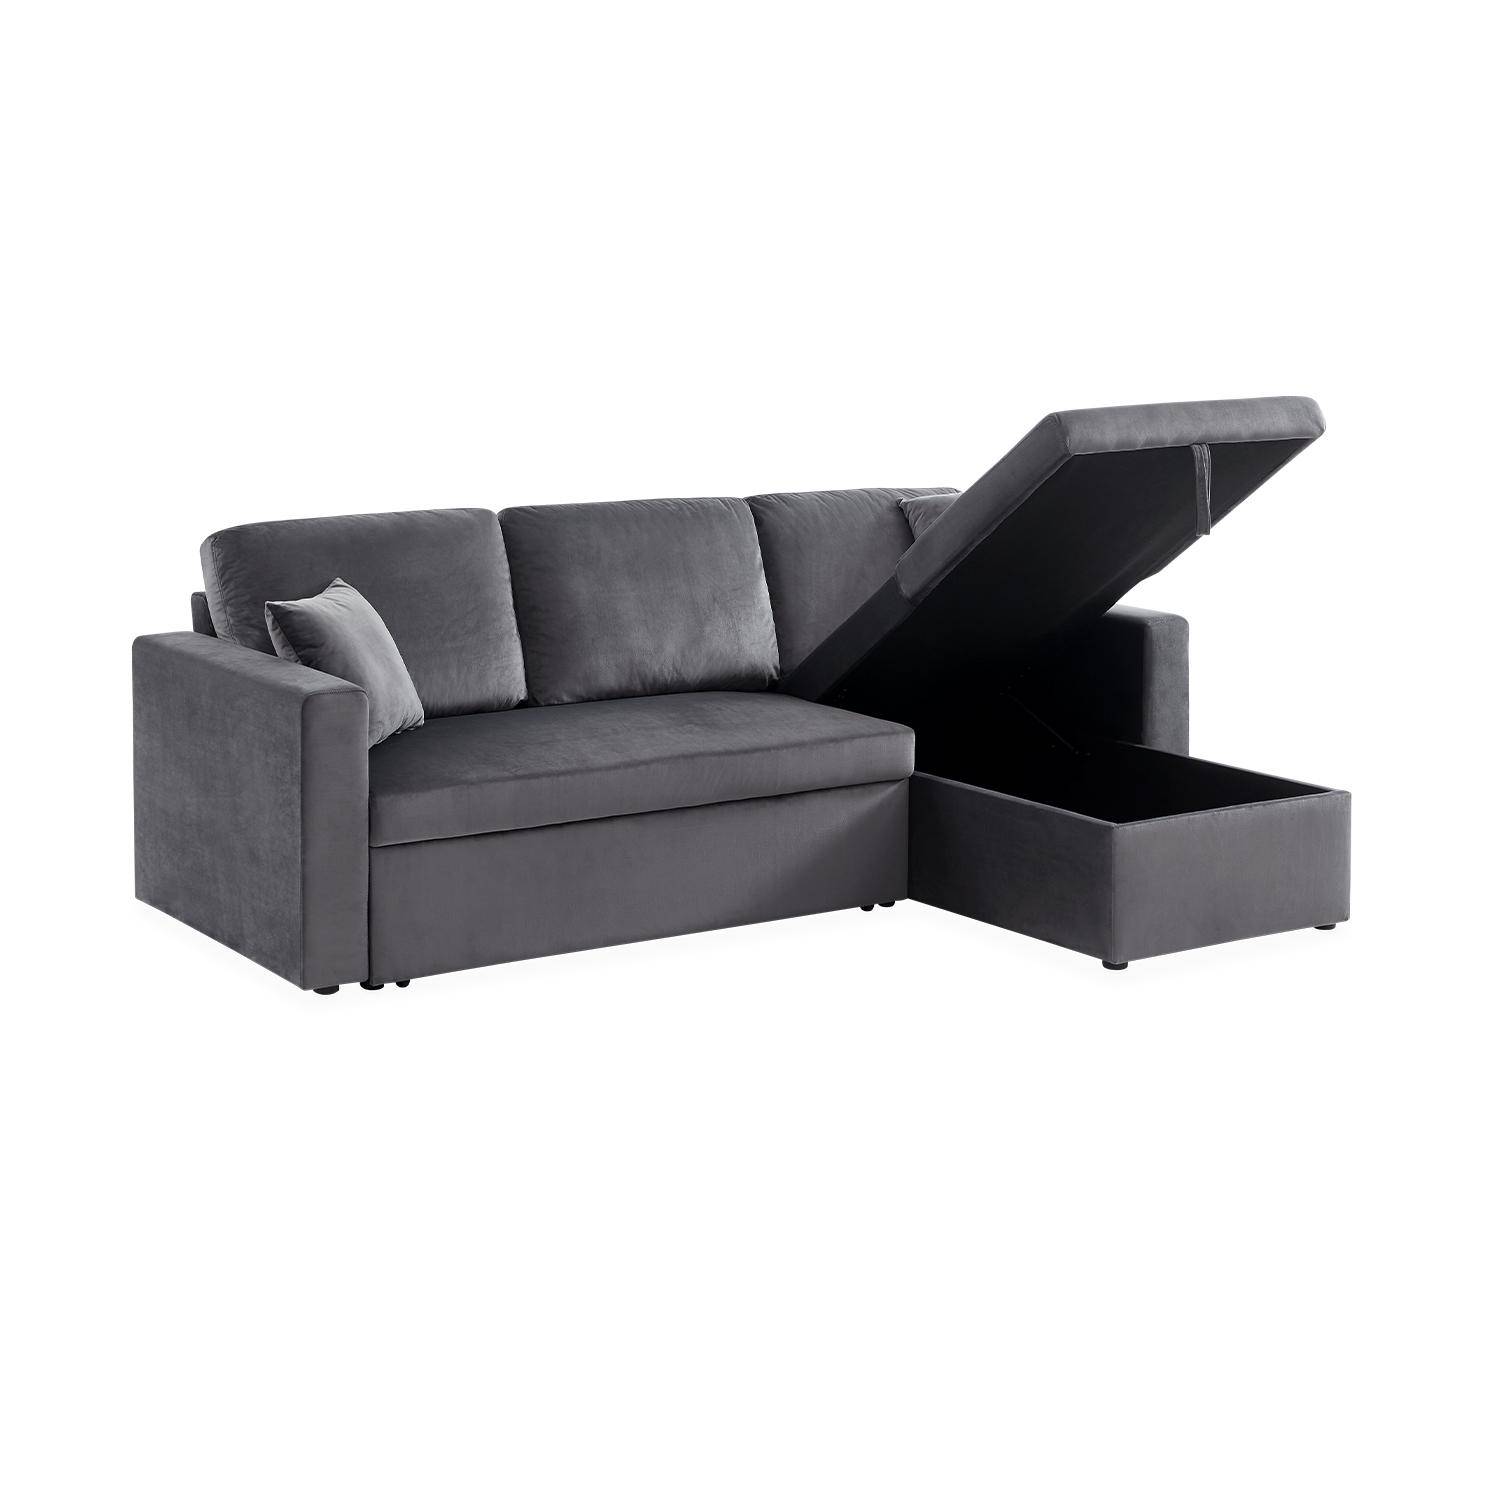 Dark grey velvet 3-seater convertible corner sofa, reversible corner armchair, storage box, modular bed,sweeek,Photo5